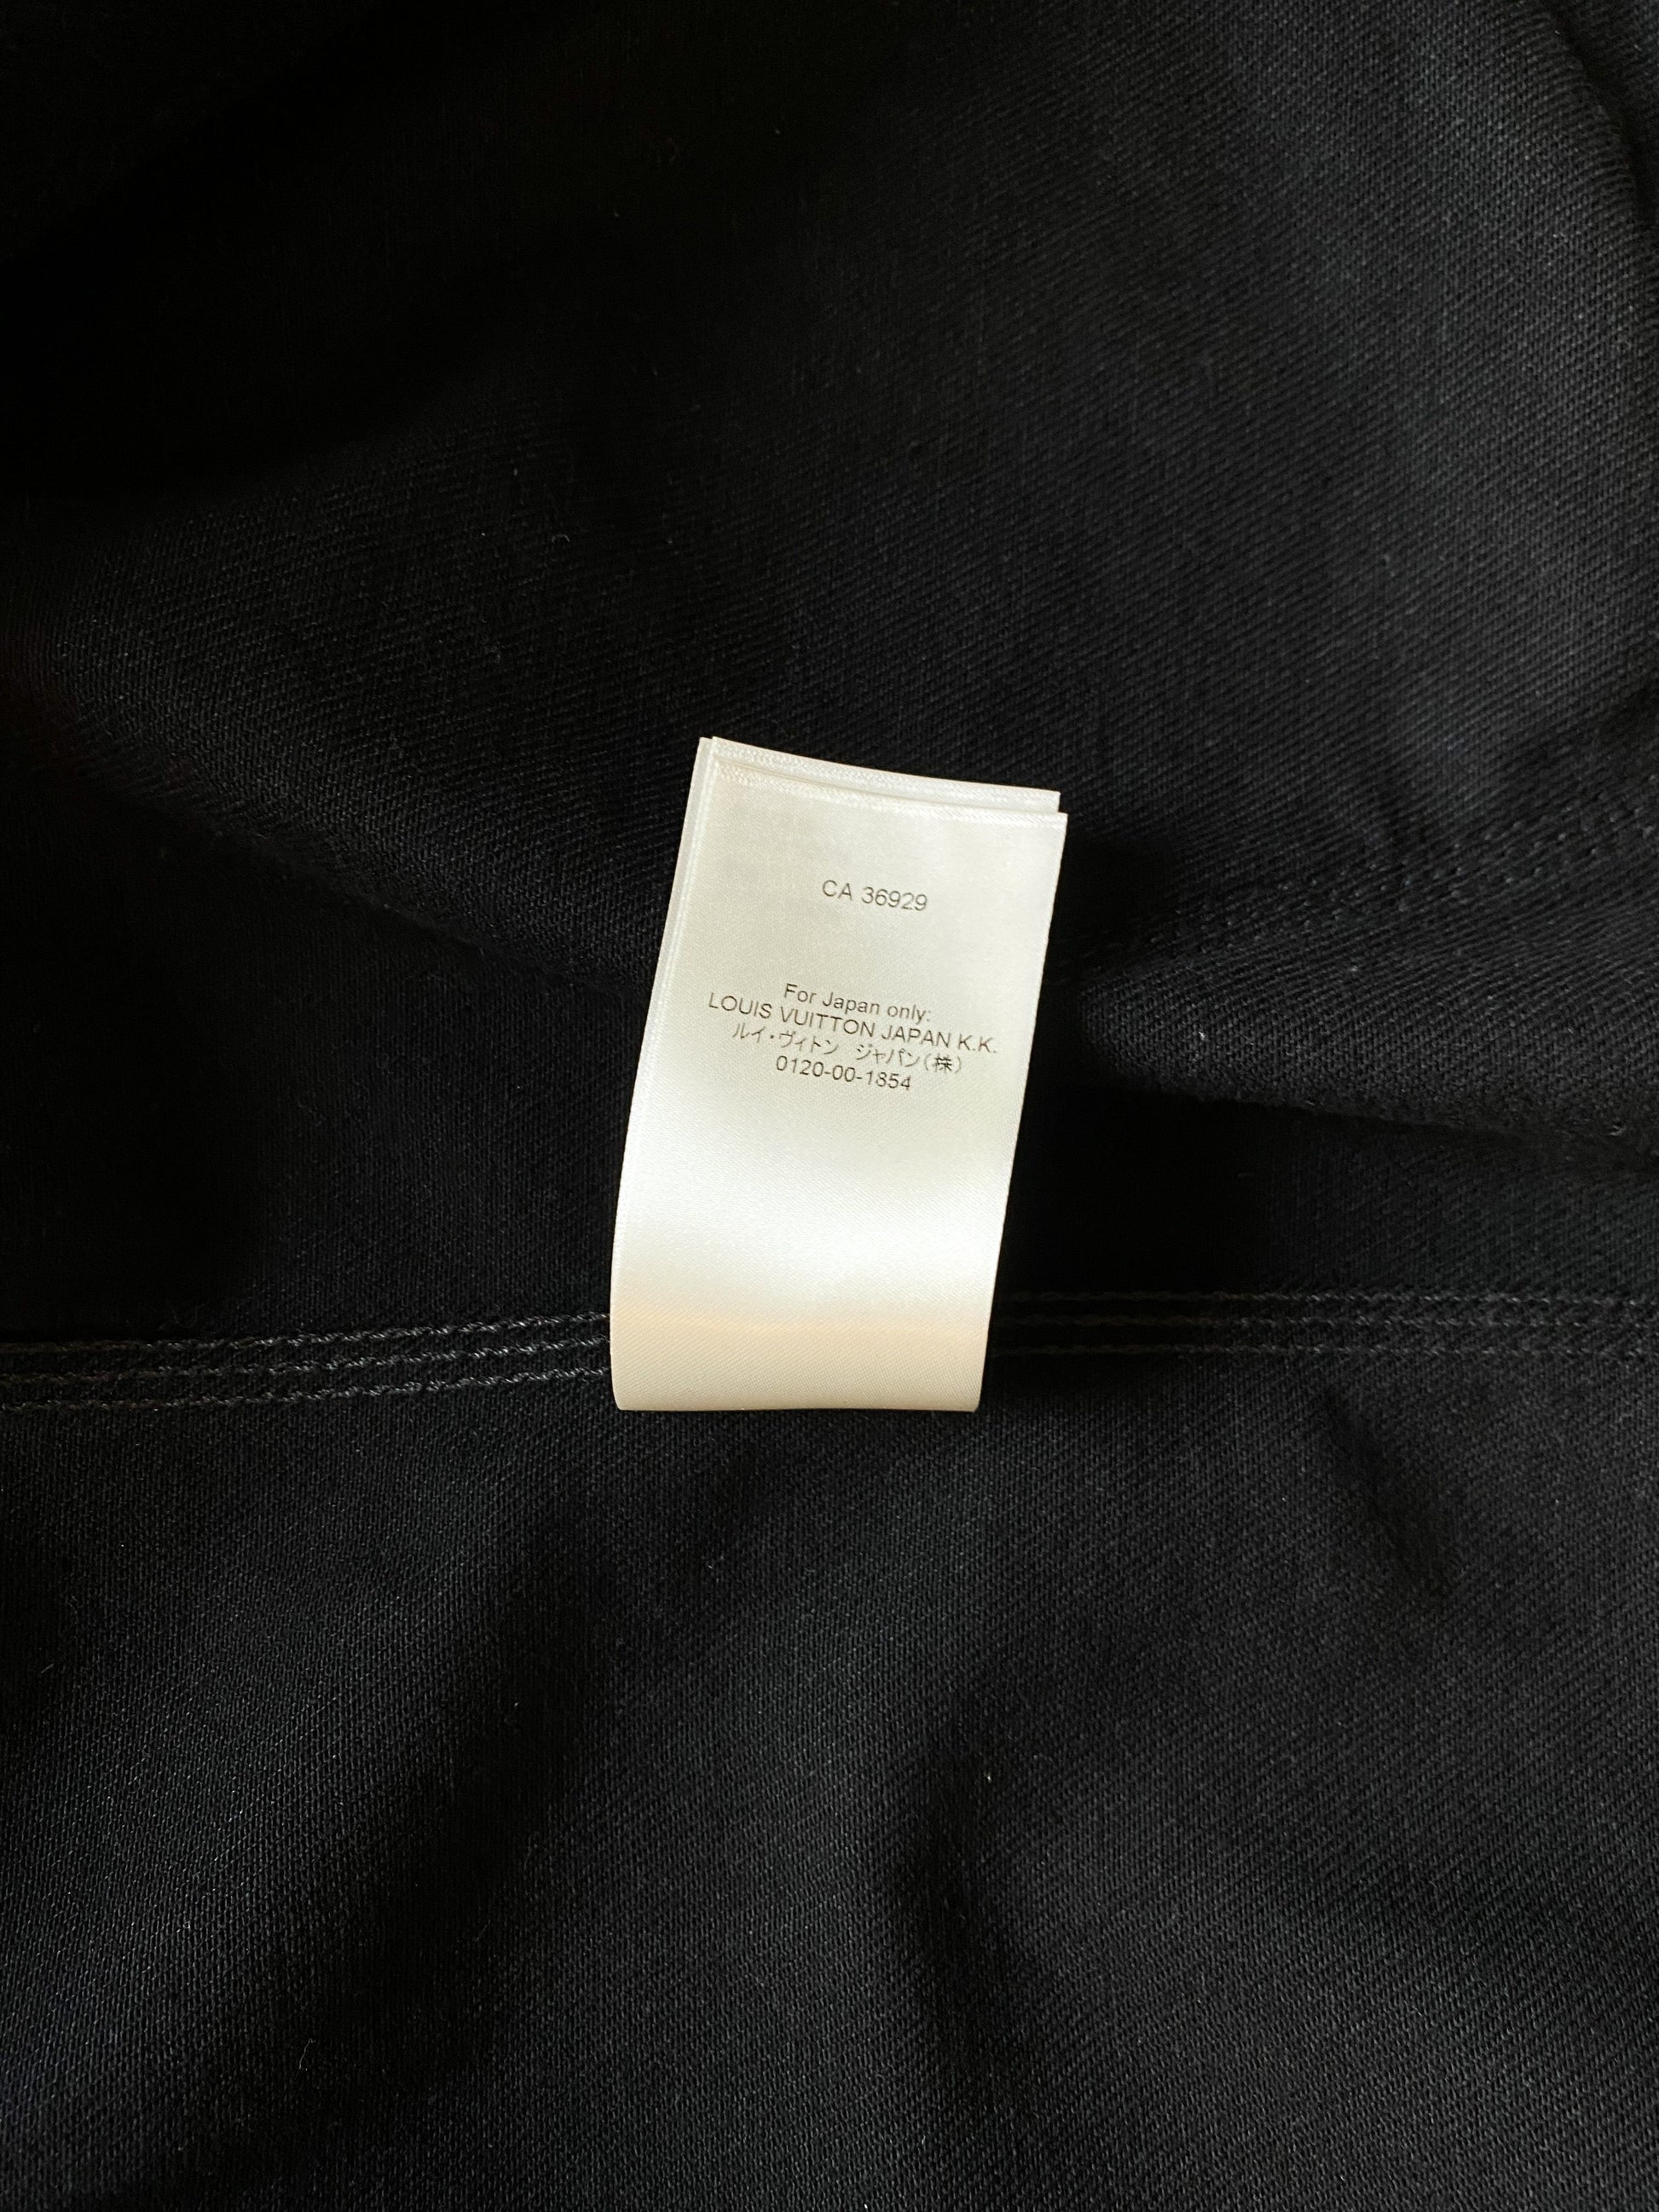 Louis XIX Denim Jacket | Size 50